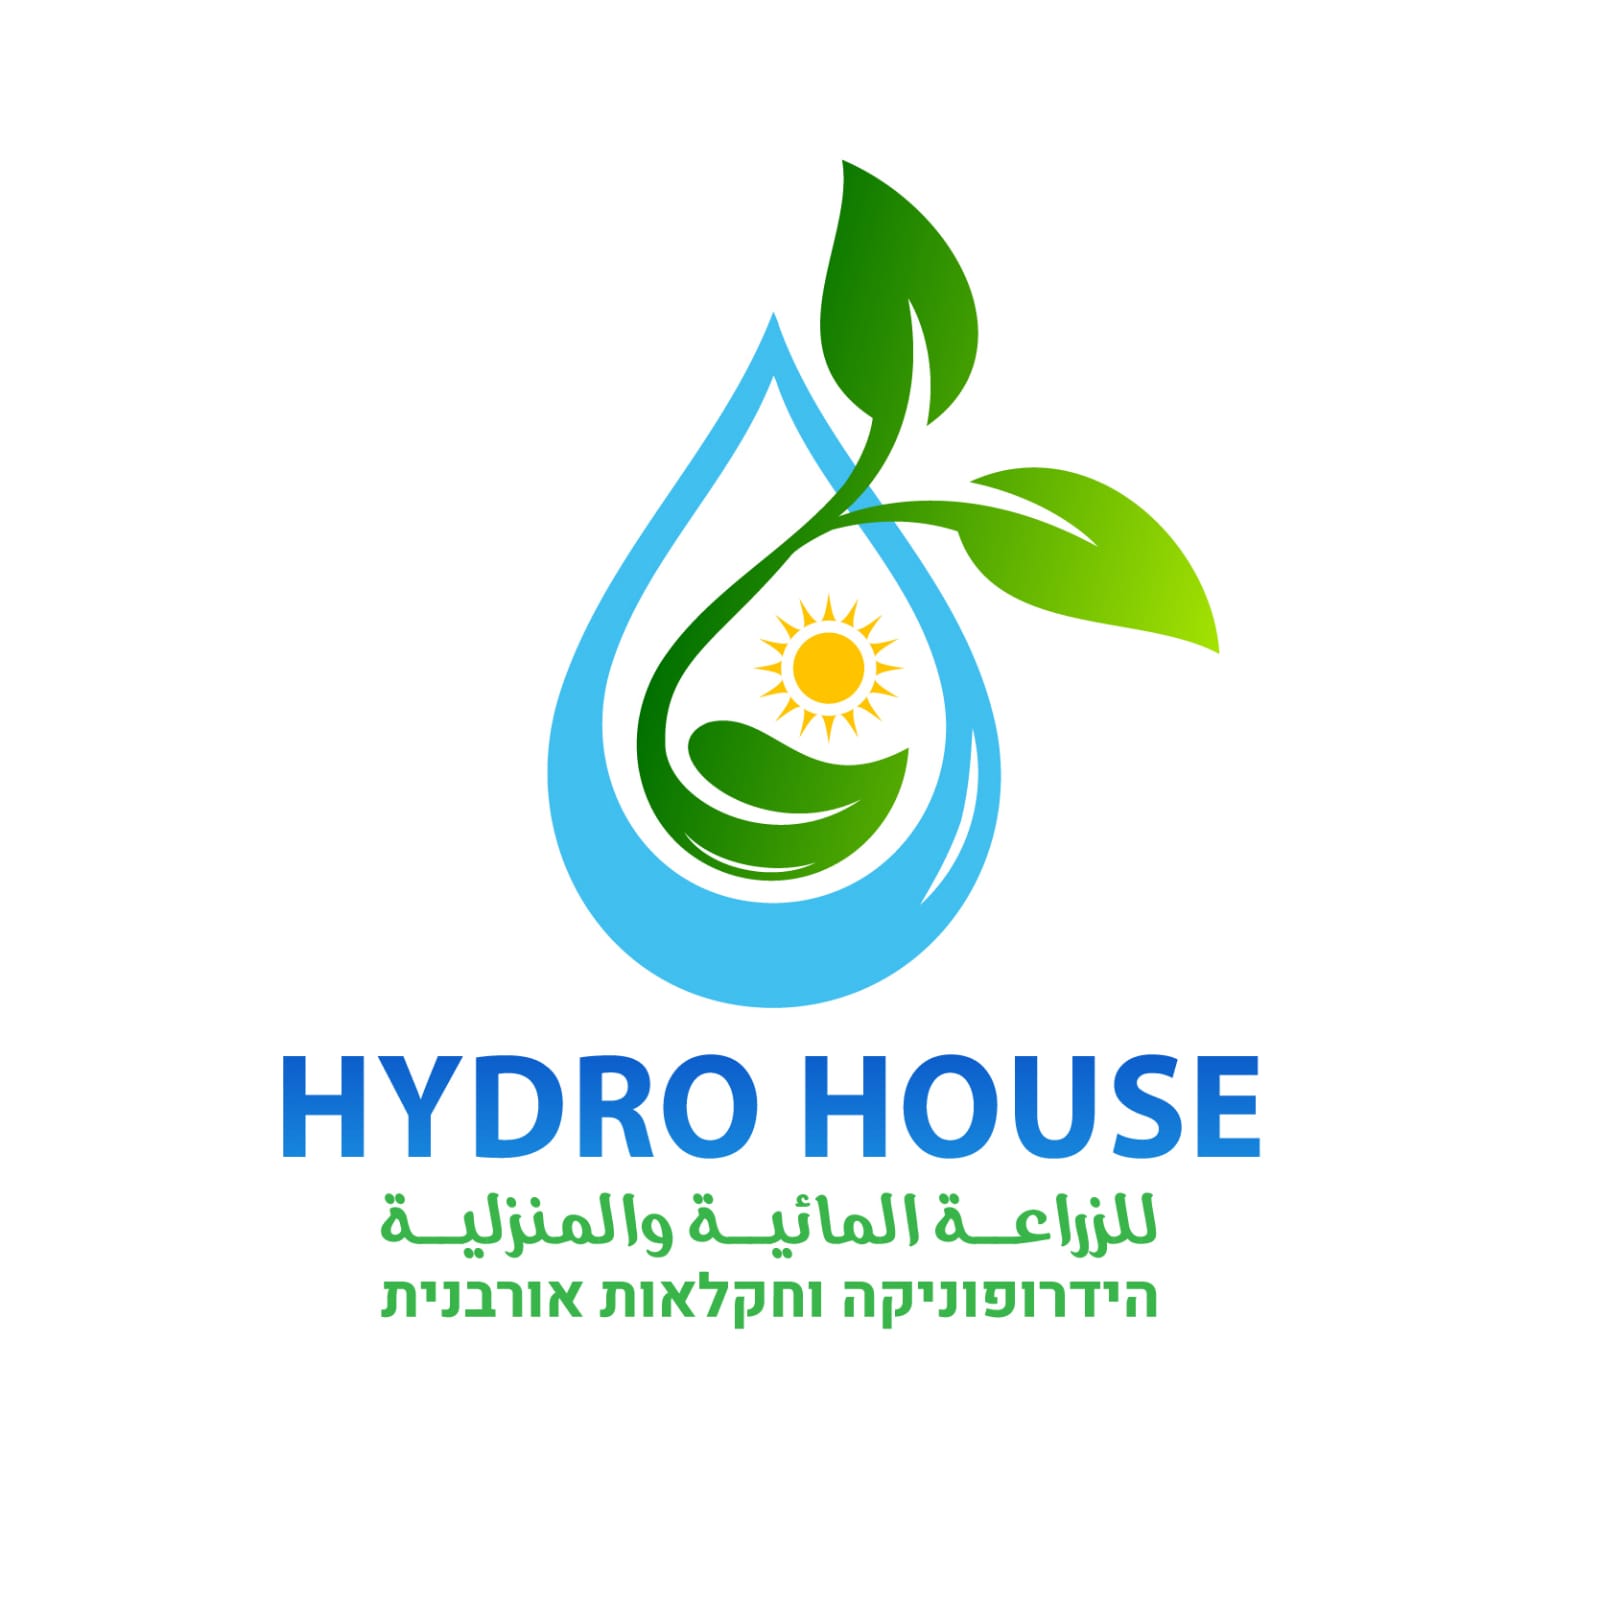 Hydro house هيدرو هاوس للزراعة المائية